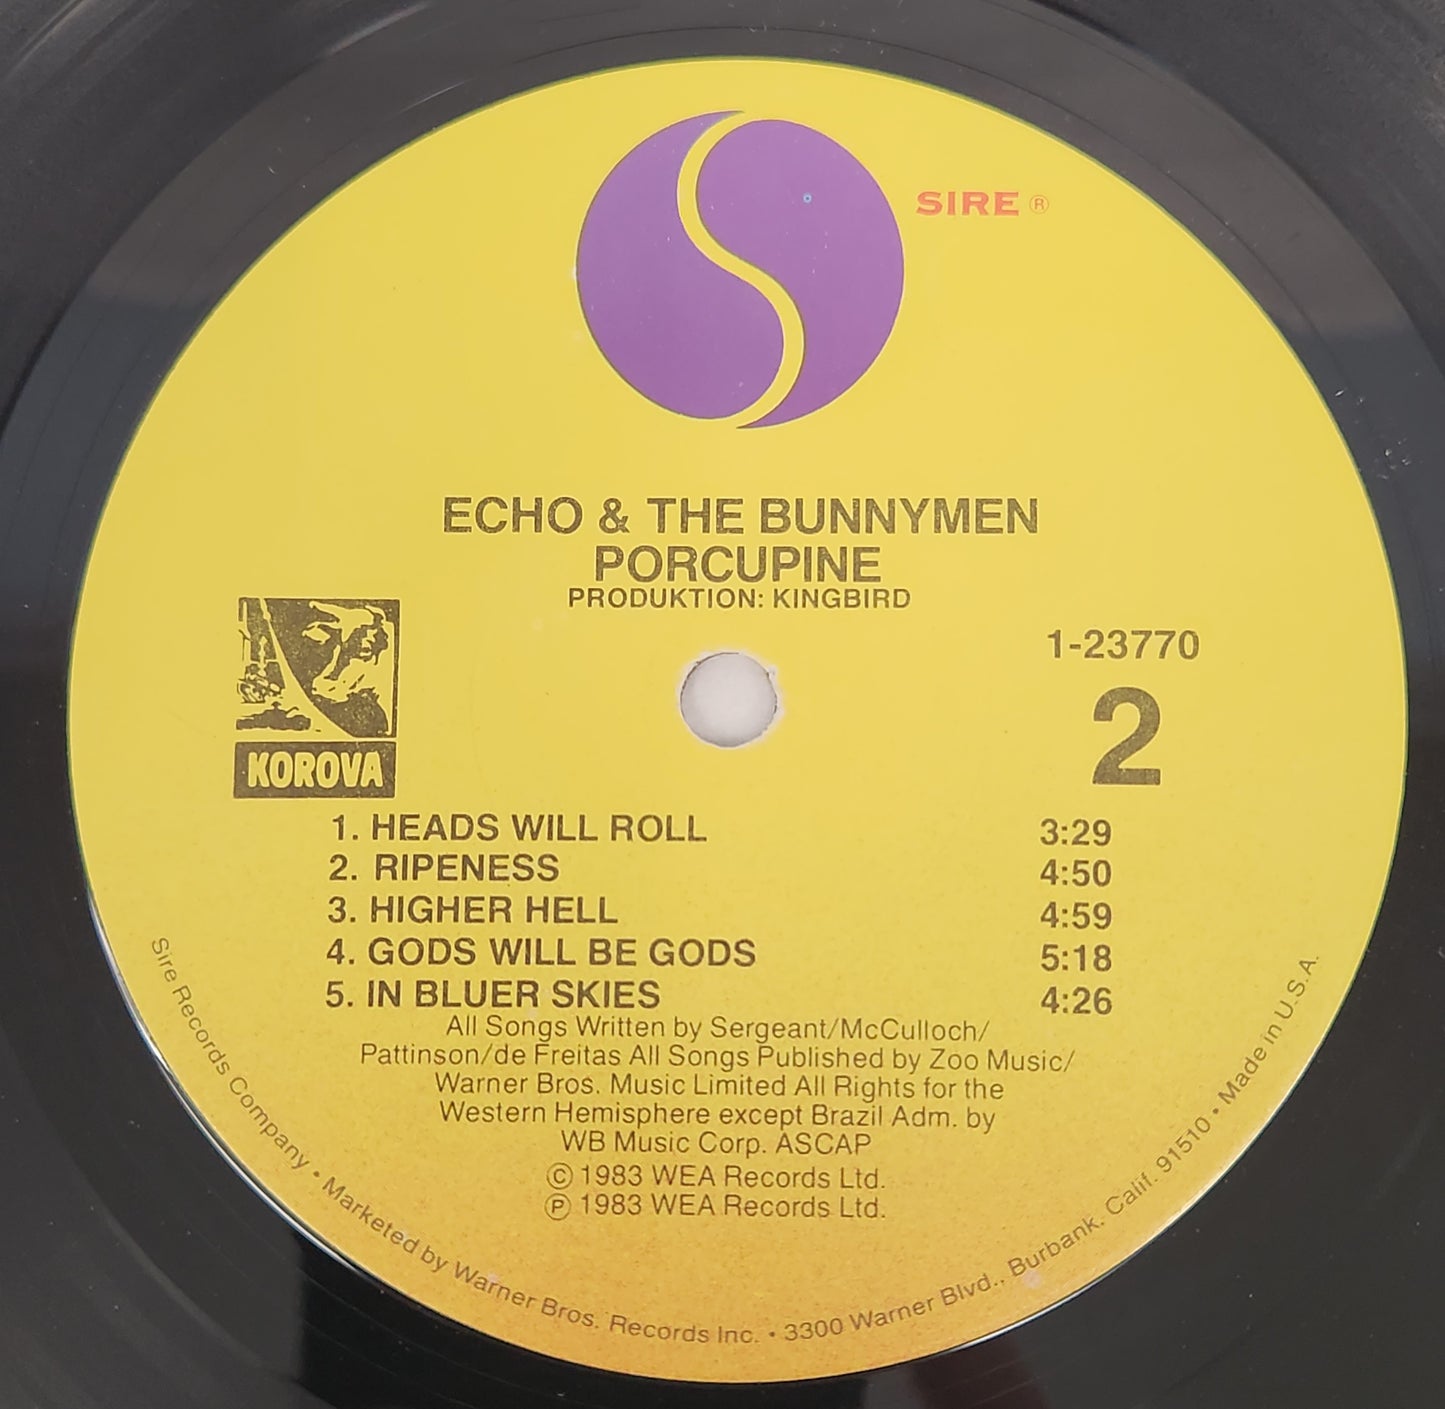 Echo & The Bunnymen "Porcupine" 1983 New Wave Indie Rock Record Album